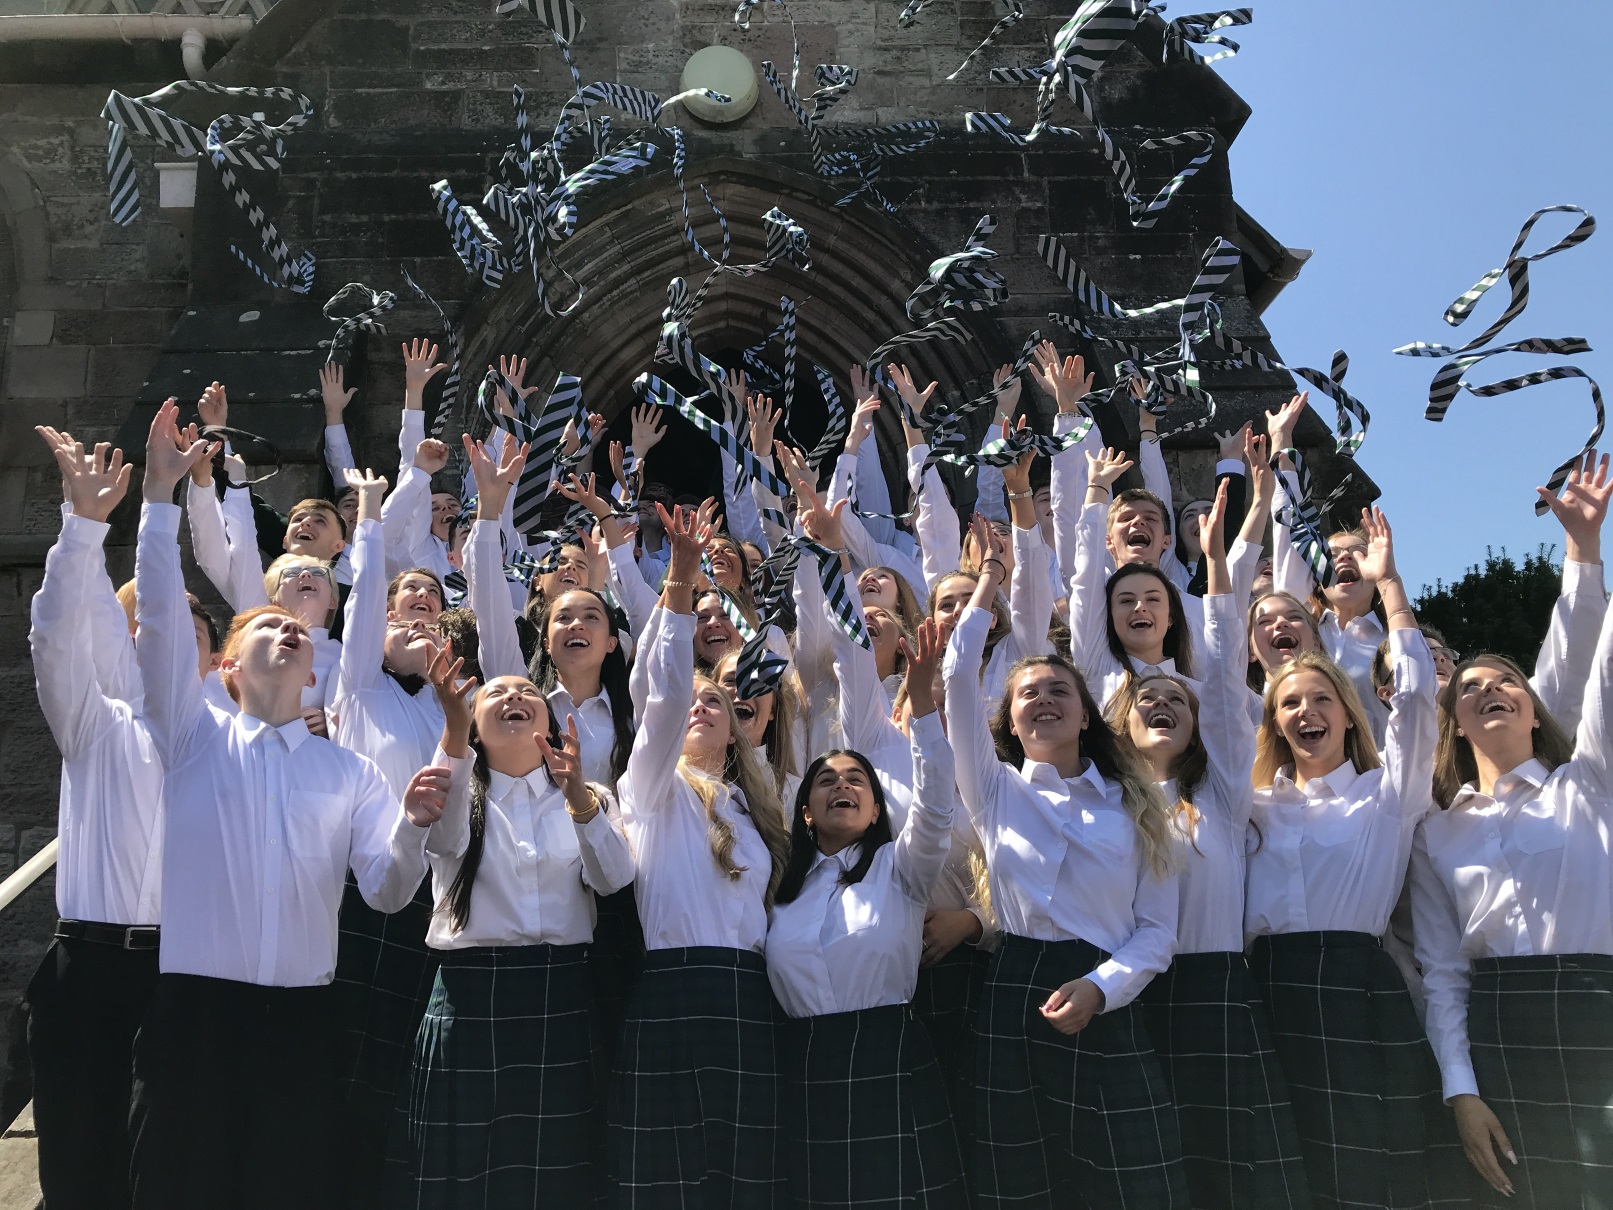 St Columba's School, Kilmacolm, are on Instagram